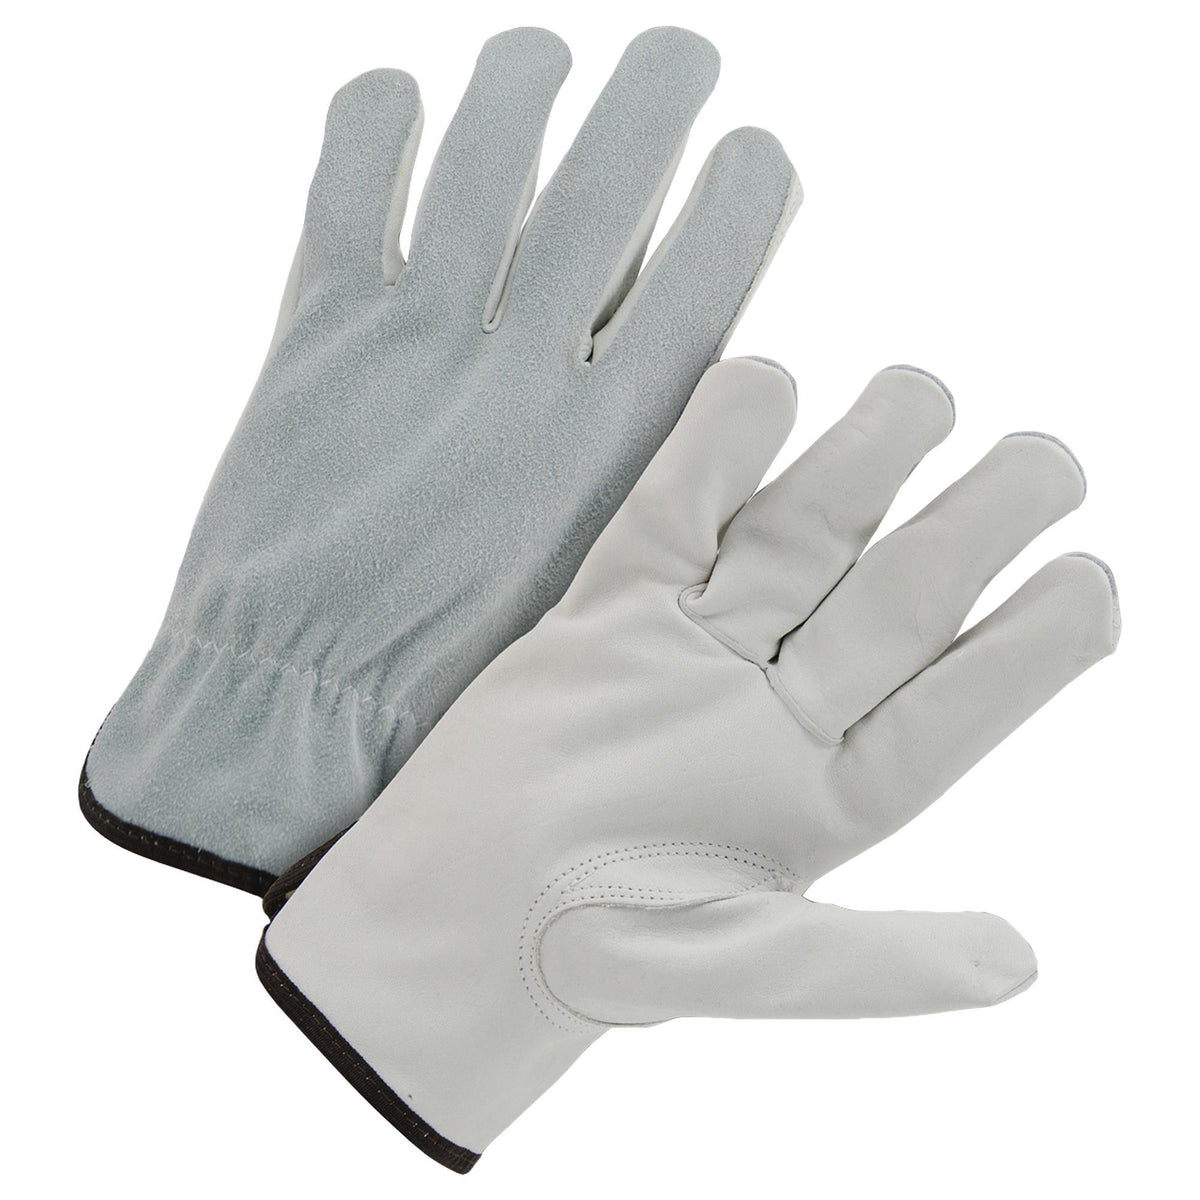 D300 Premium Leather Driving Gloves 1 Dozen